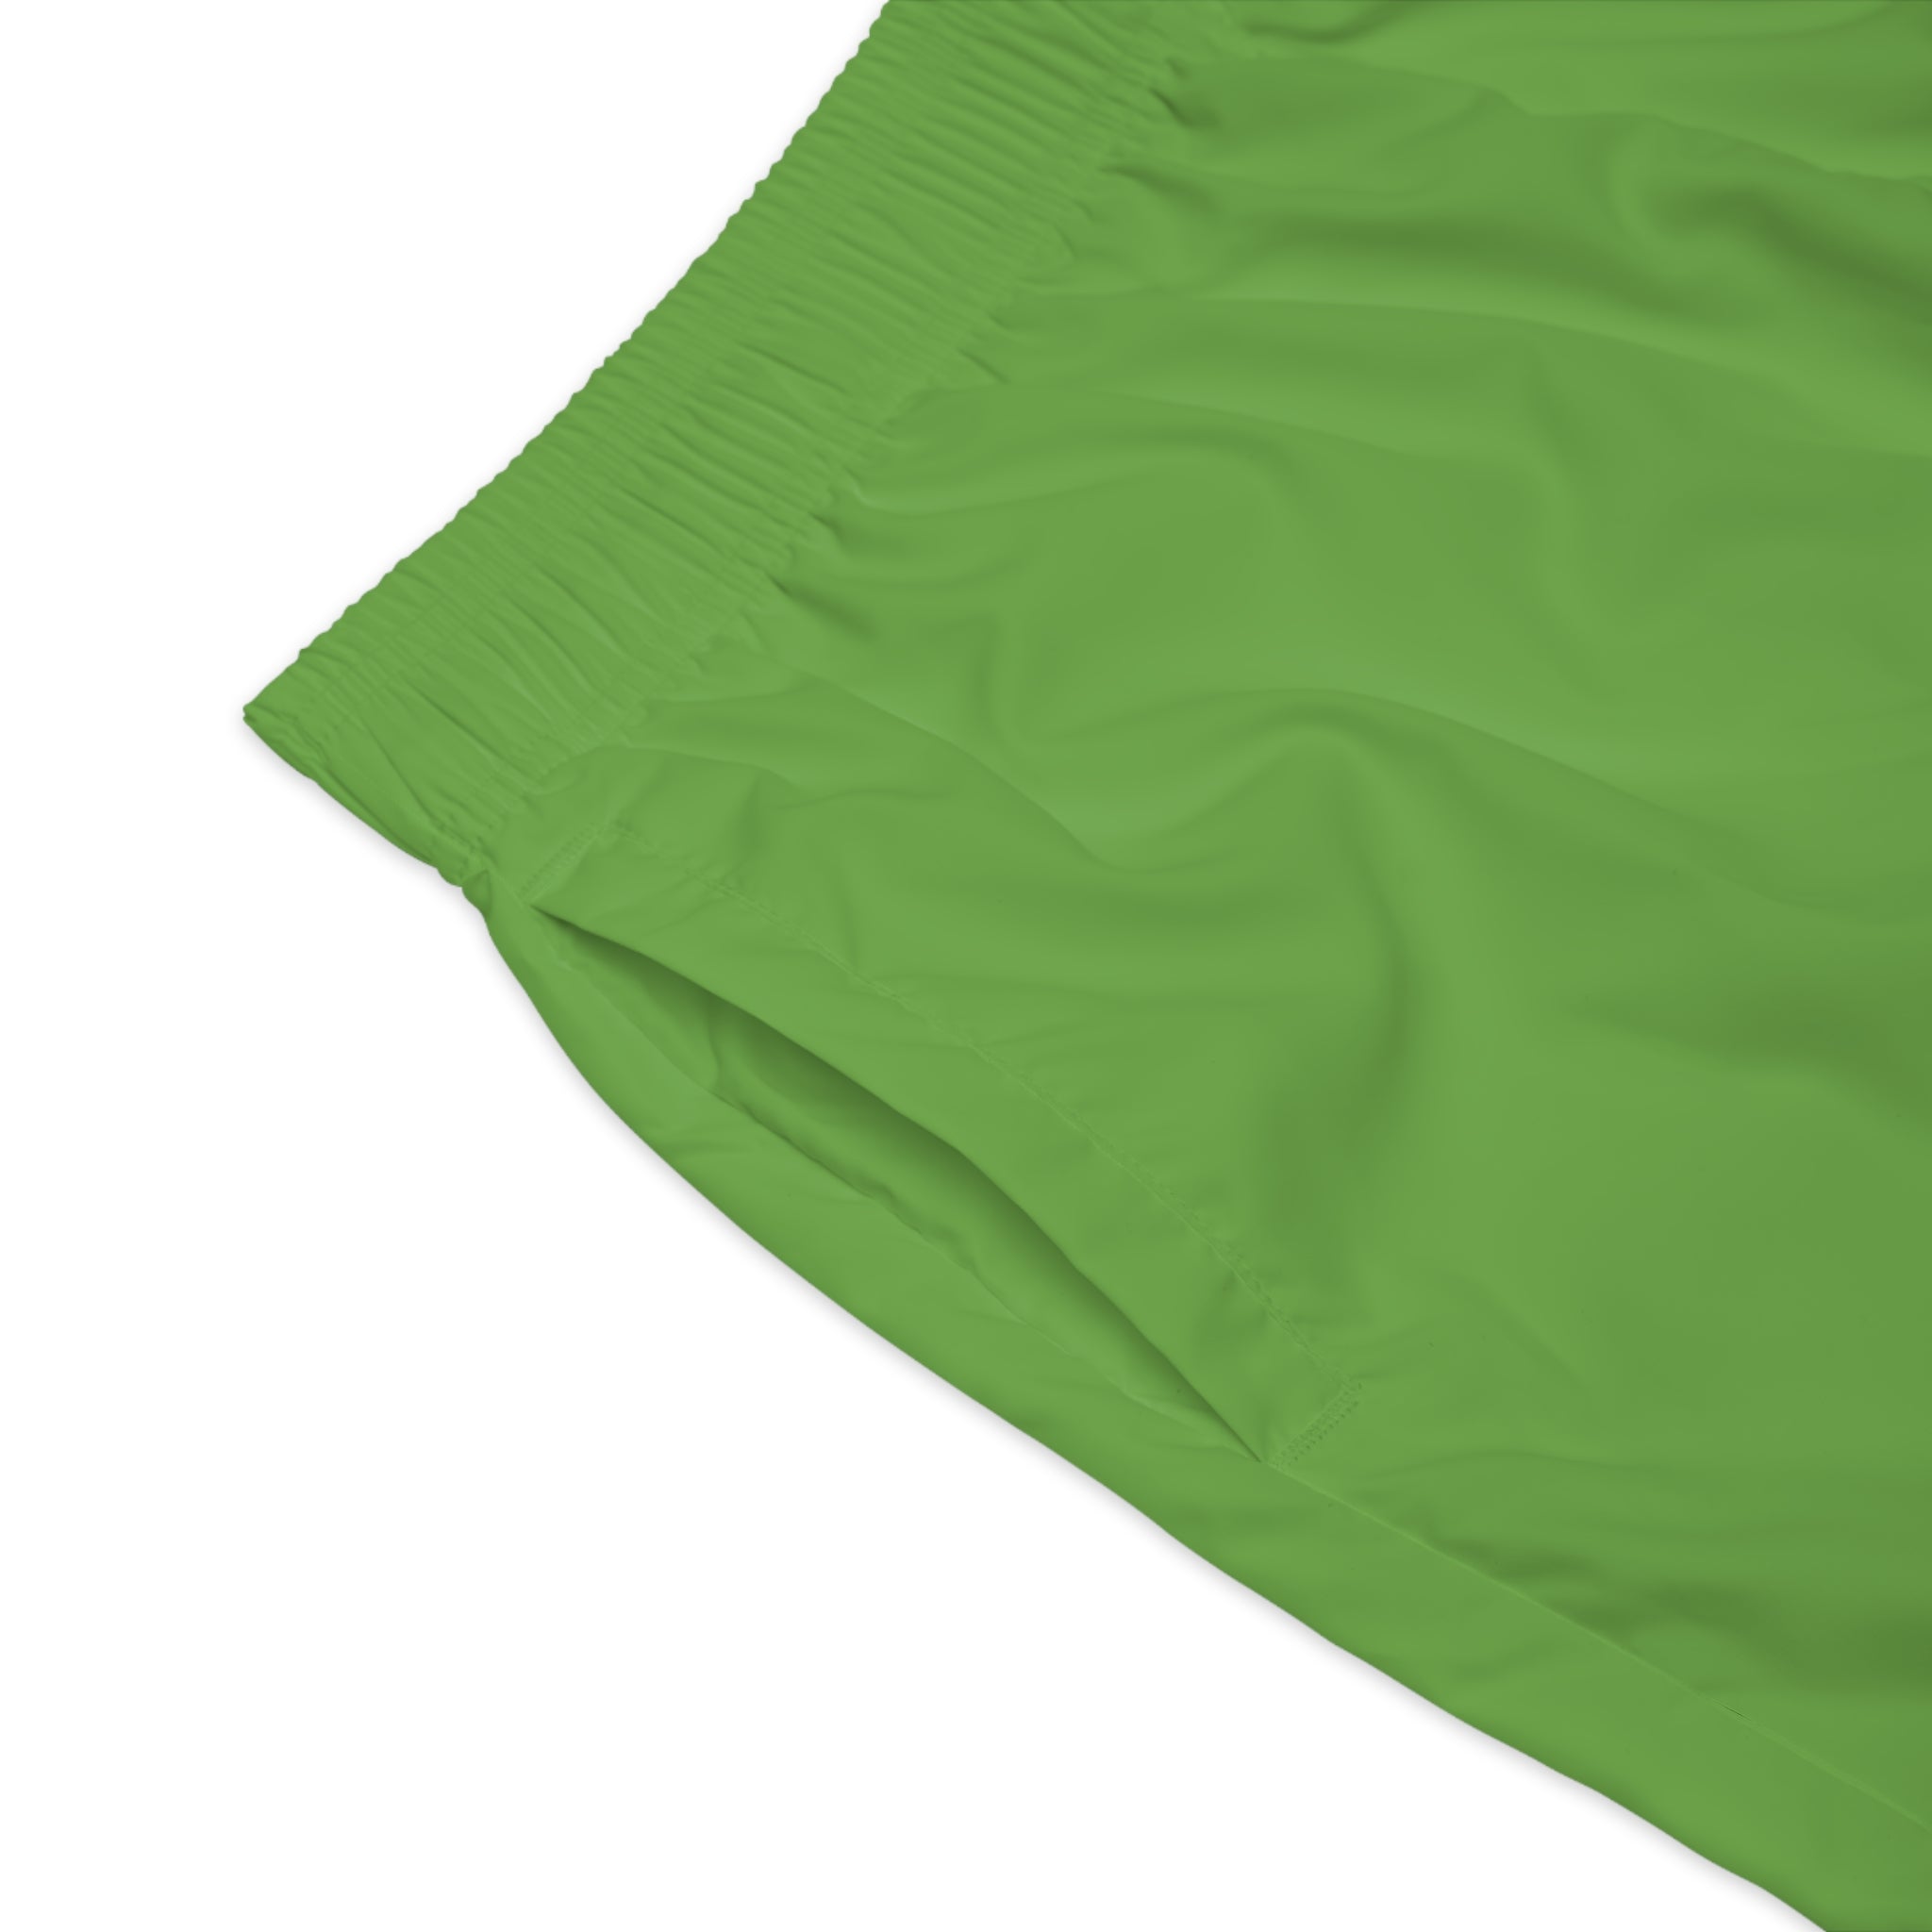 CombinedMinds Men's Jogger Shorts Green/White Logo